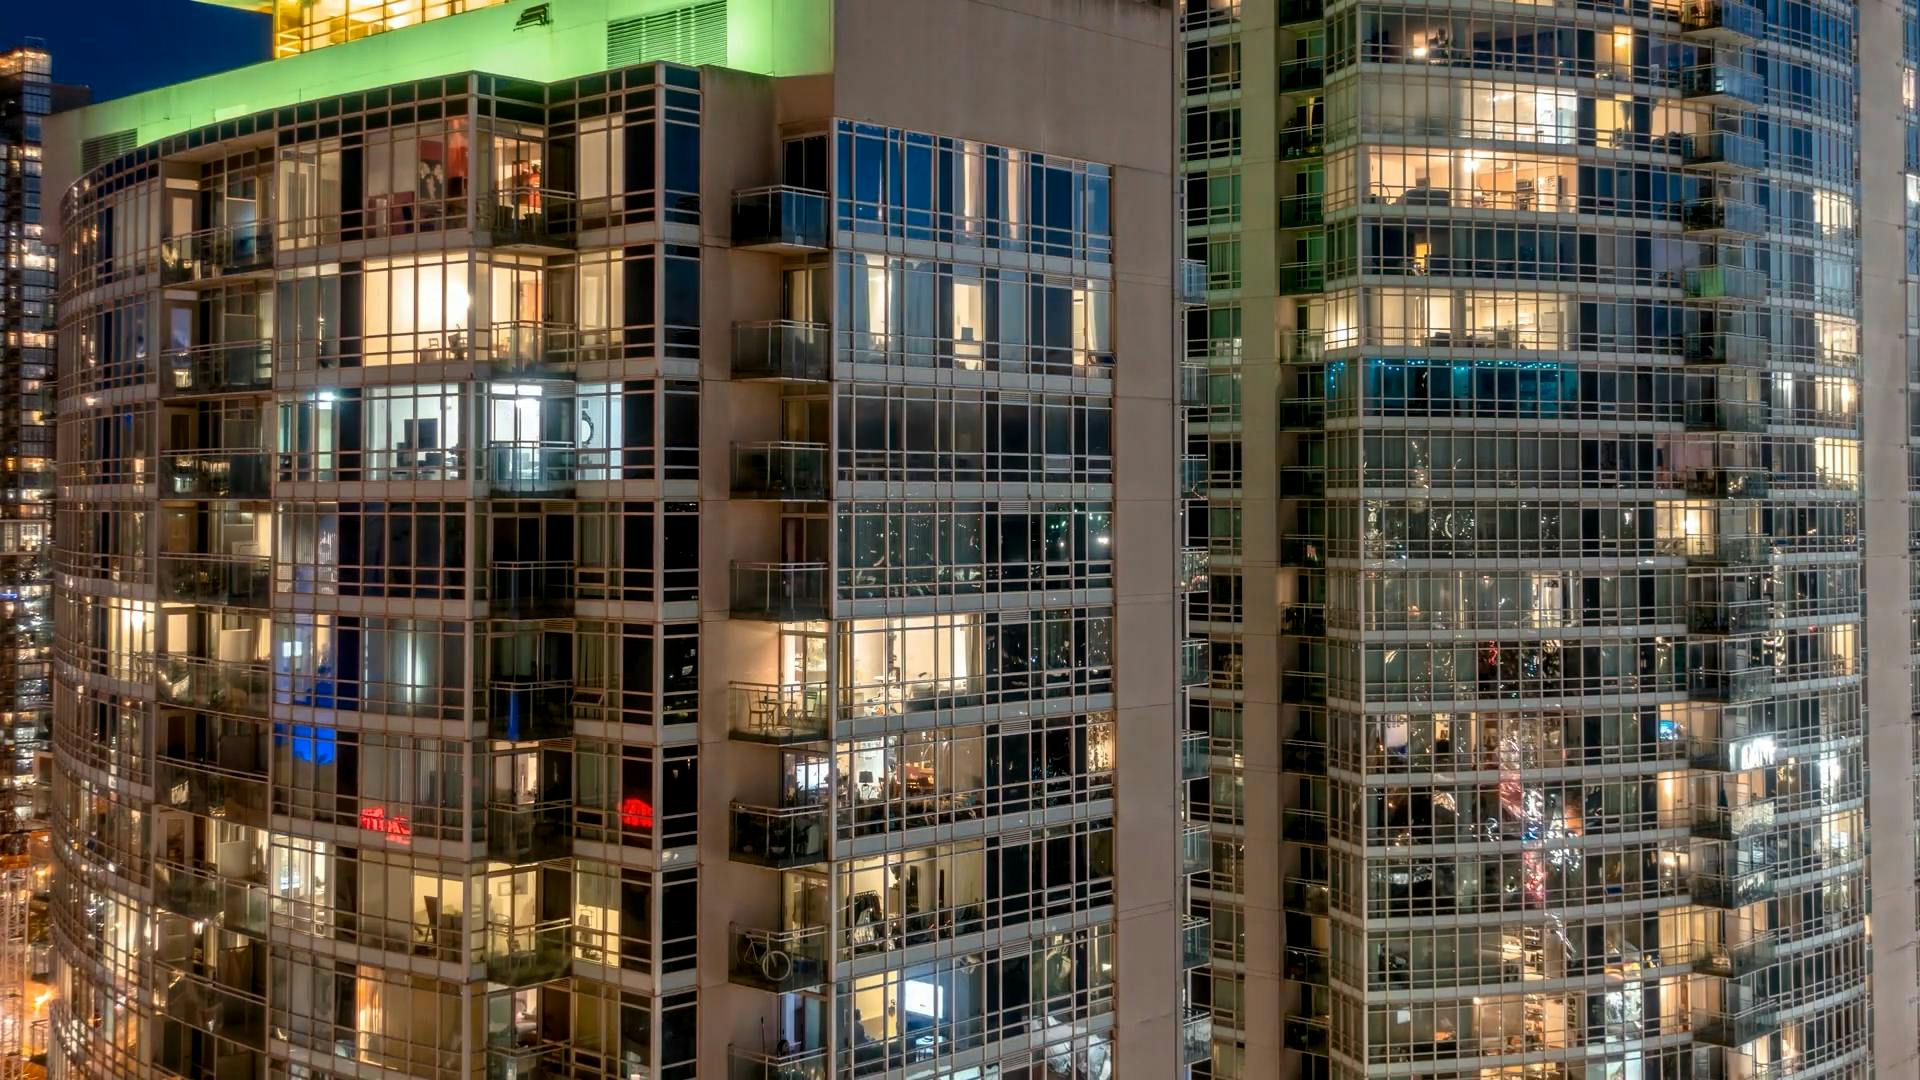 Digital twins are helping real-world buildings achieve huge carbon efficiencies